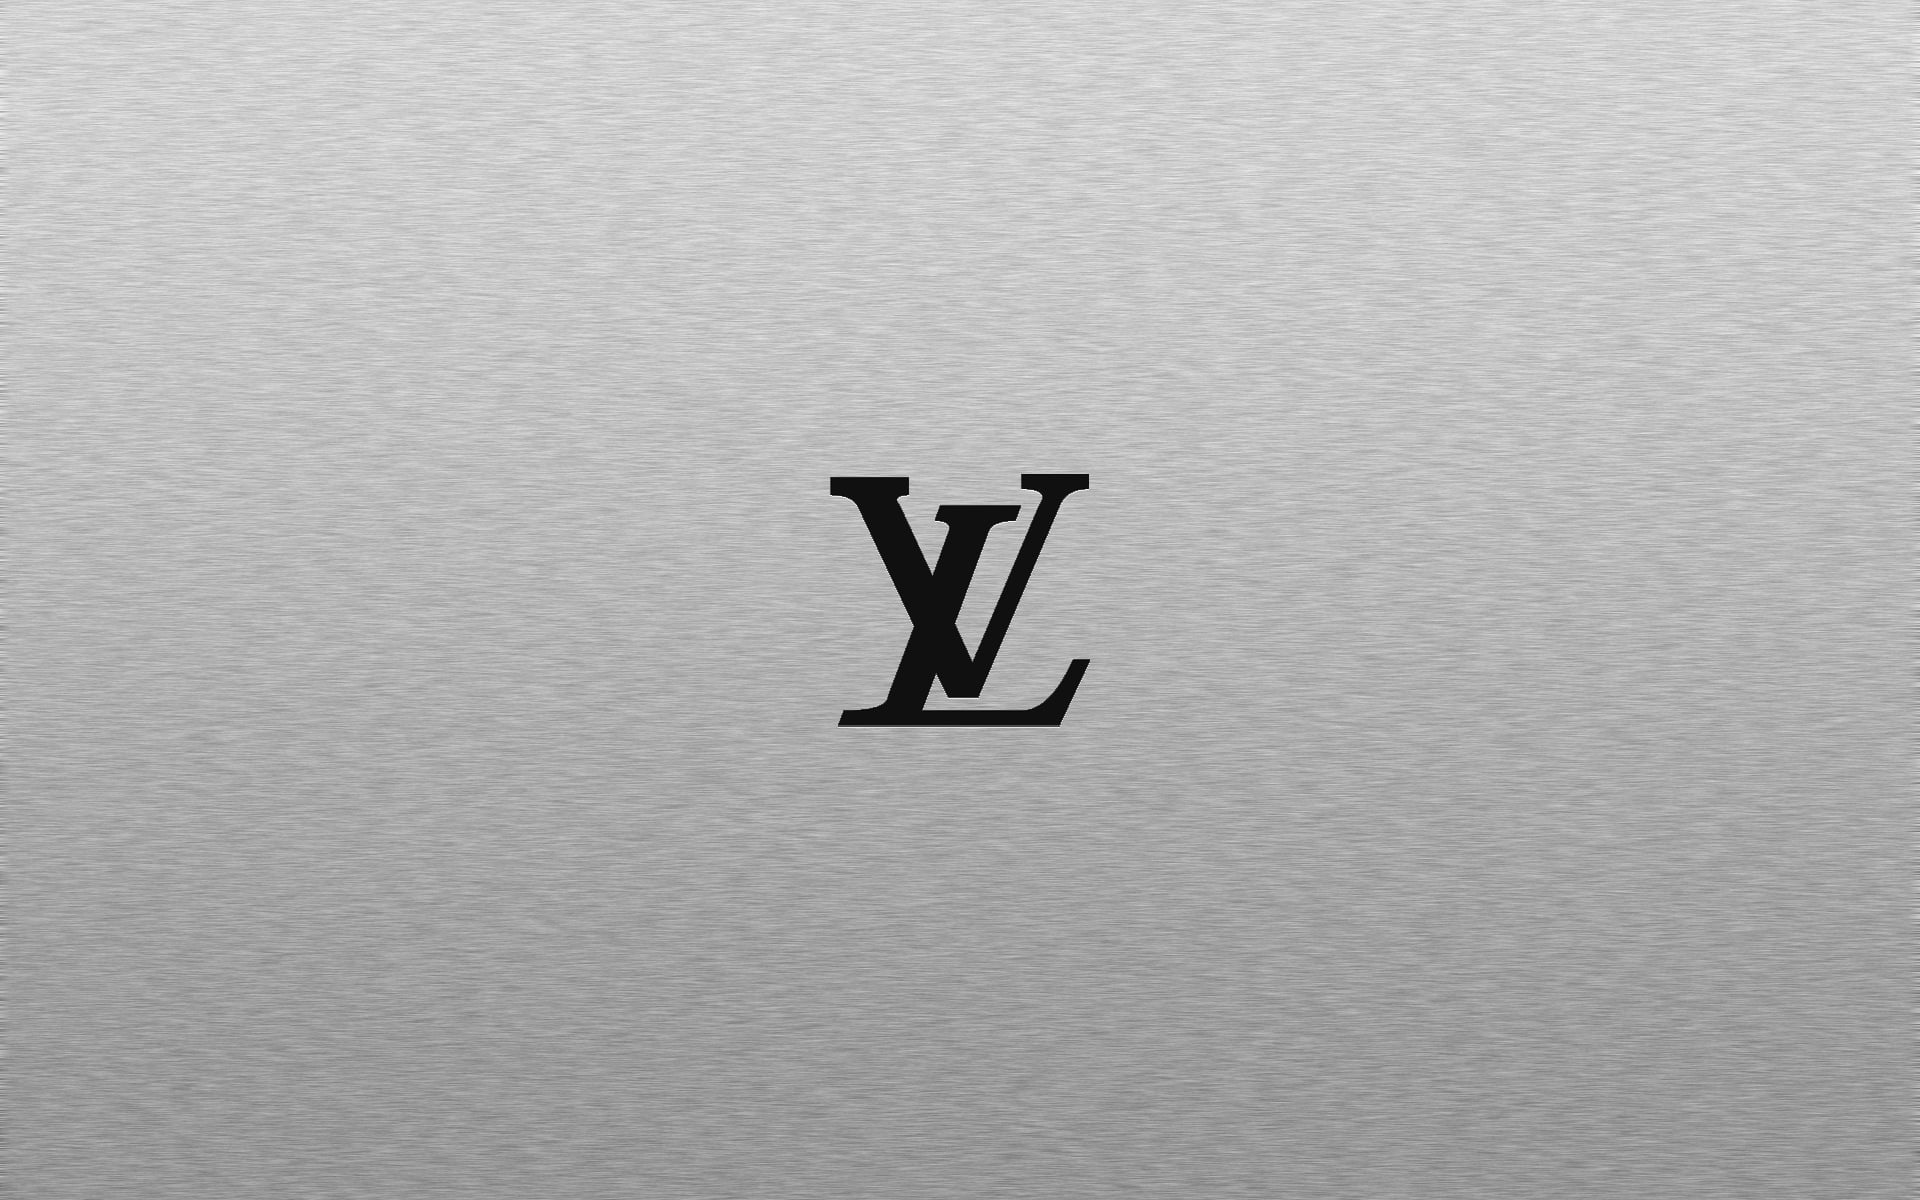 Luis Vuitton Supreme, black and white, damask, luis vuitton, lv, supreme,  vintage, HD phone wallpaper